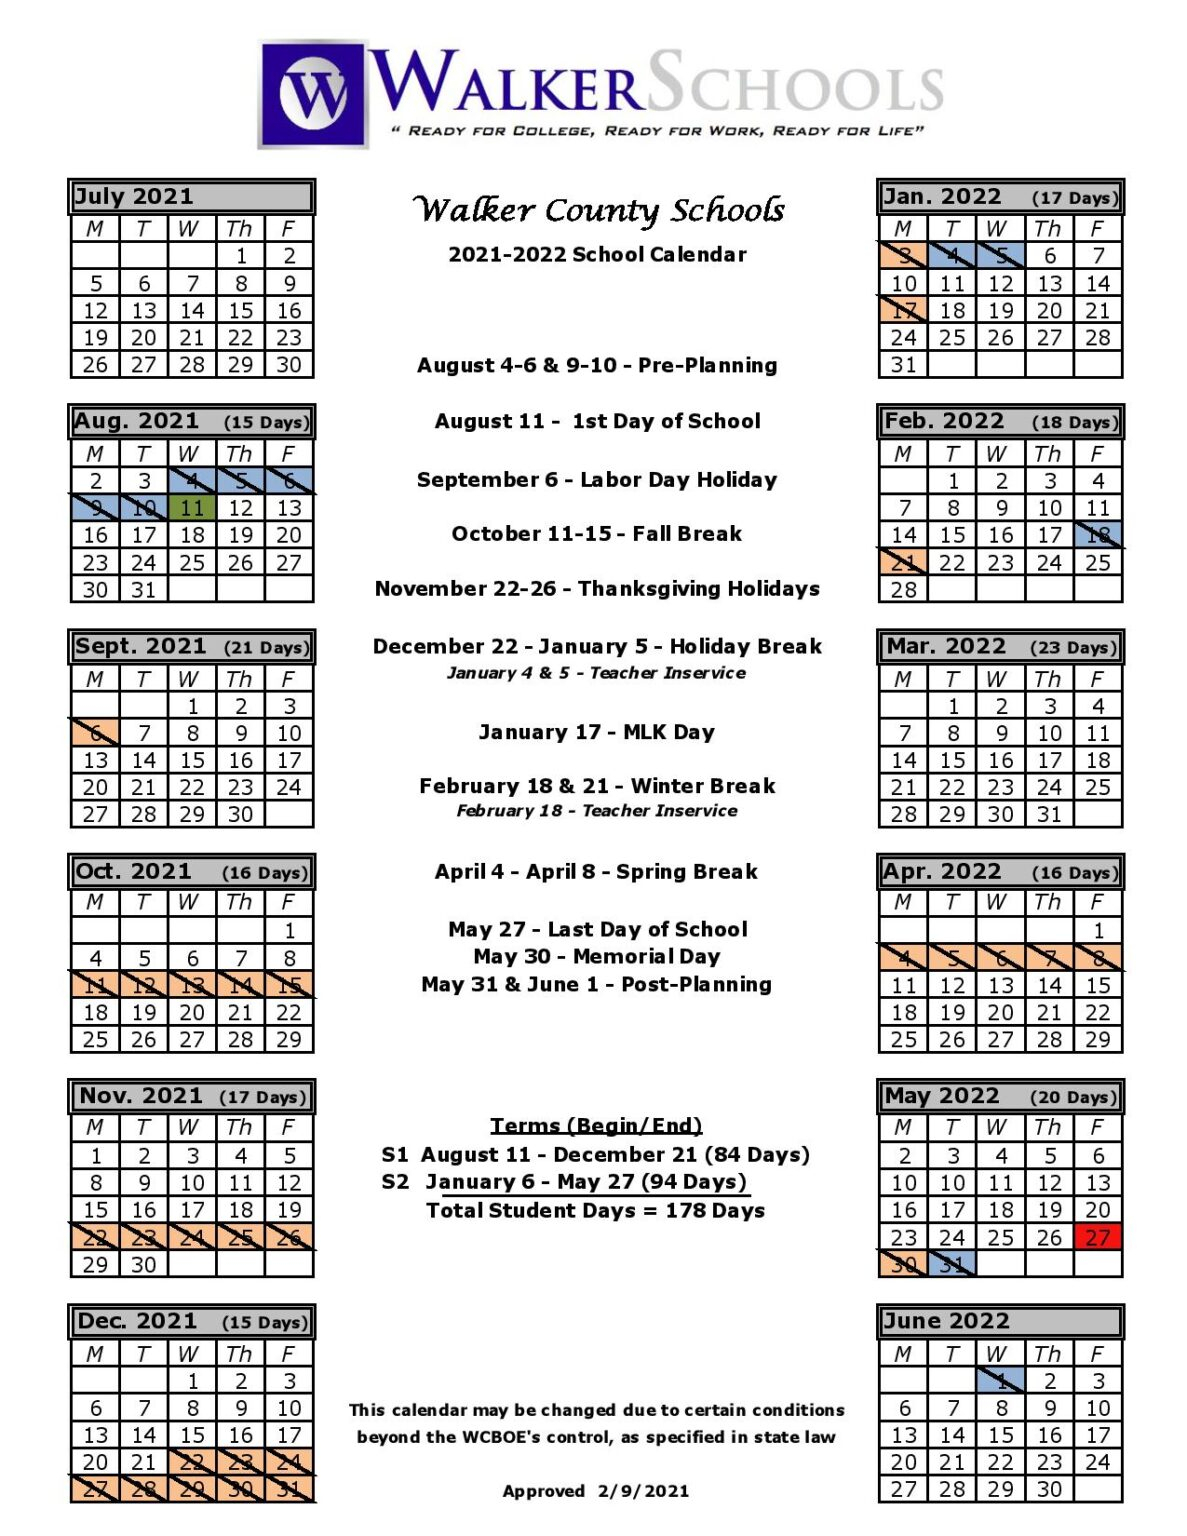 Walker County Schools Calendar 2021-2022 In Pdf